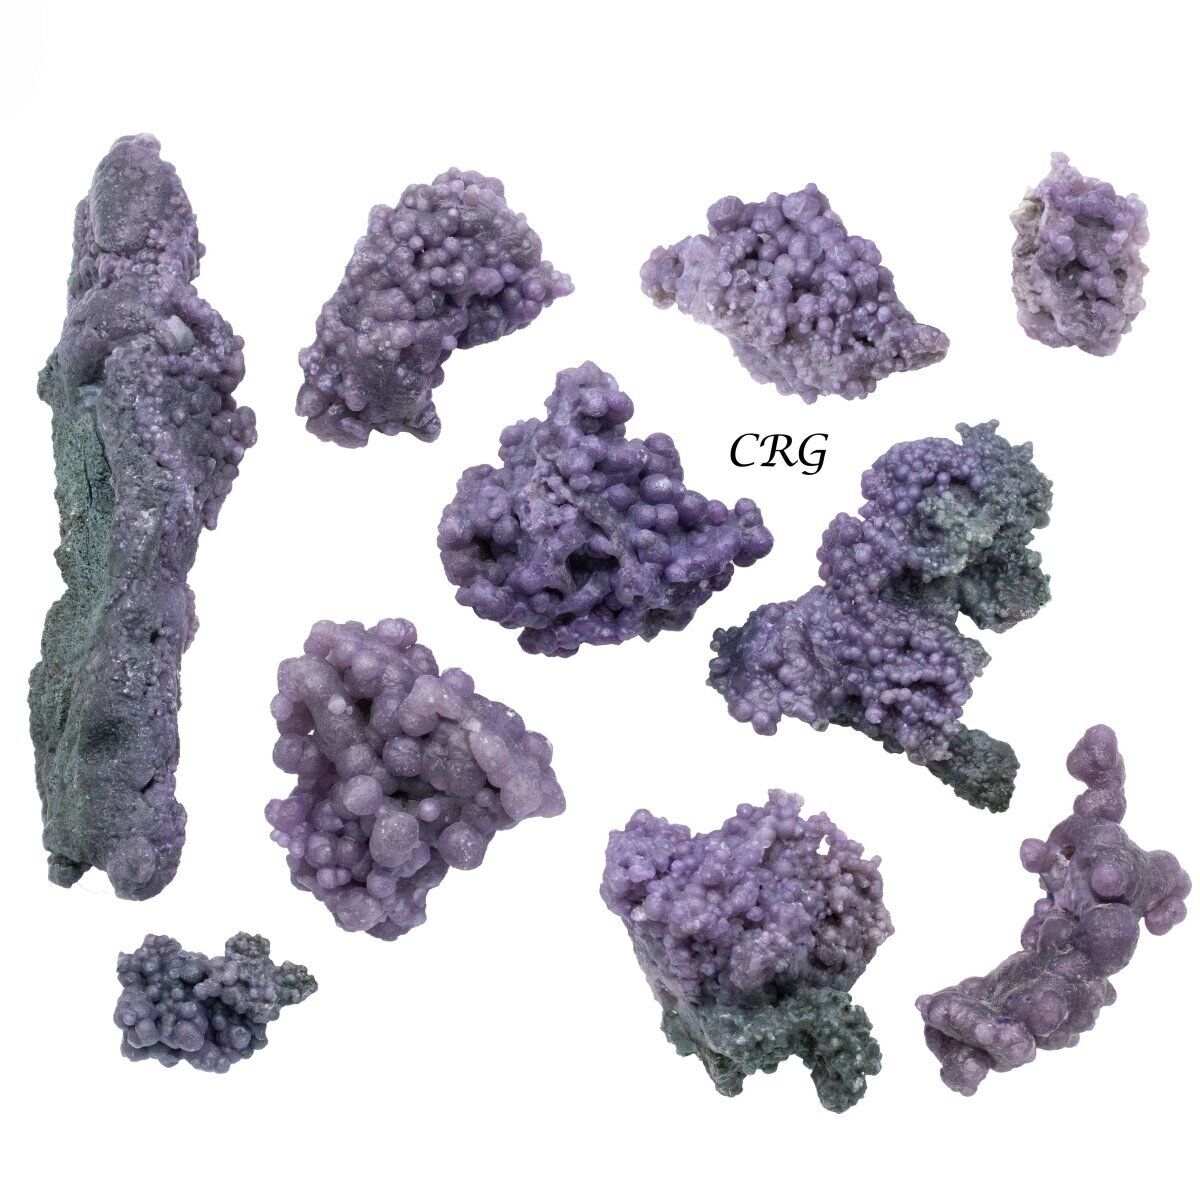 Grape Agate A-Grade Clusters (1 Kilogram) Size 2 to 5 Inches Bulk Wholesale Lot